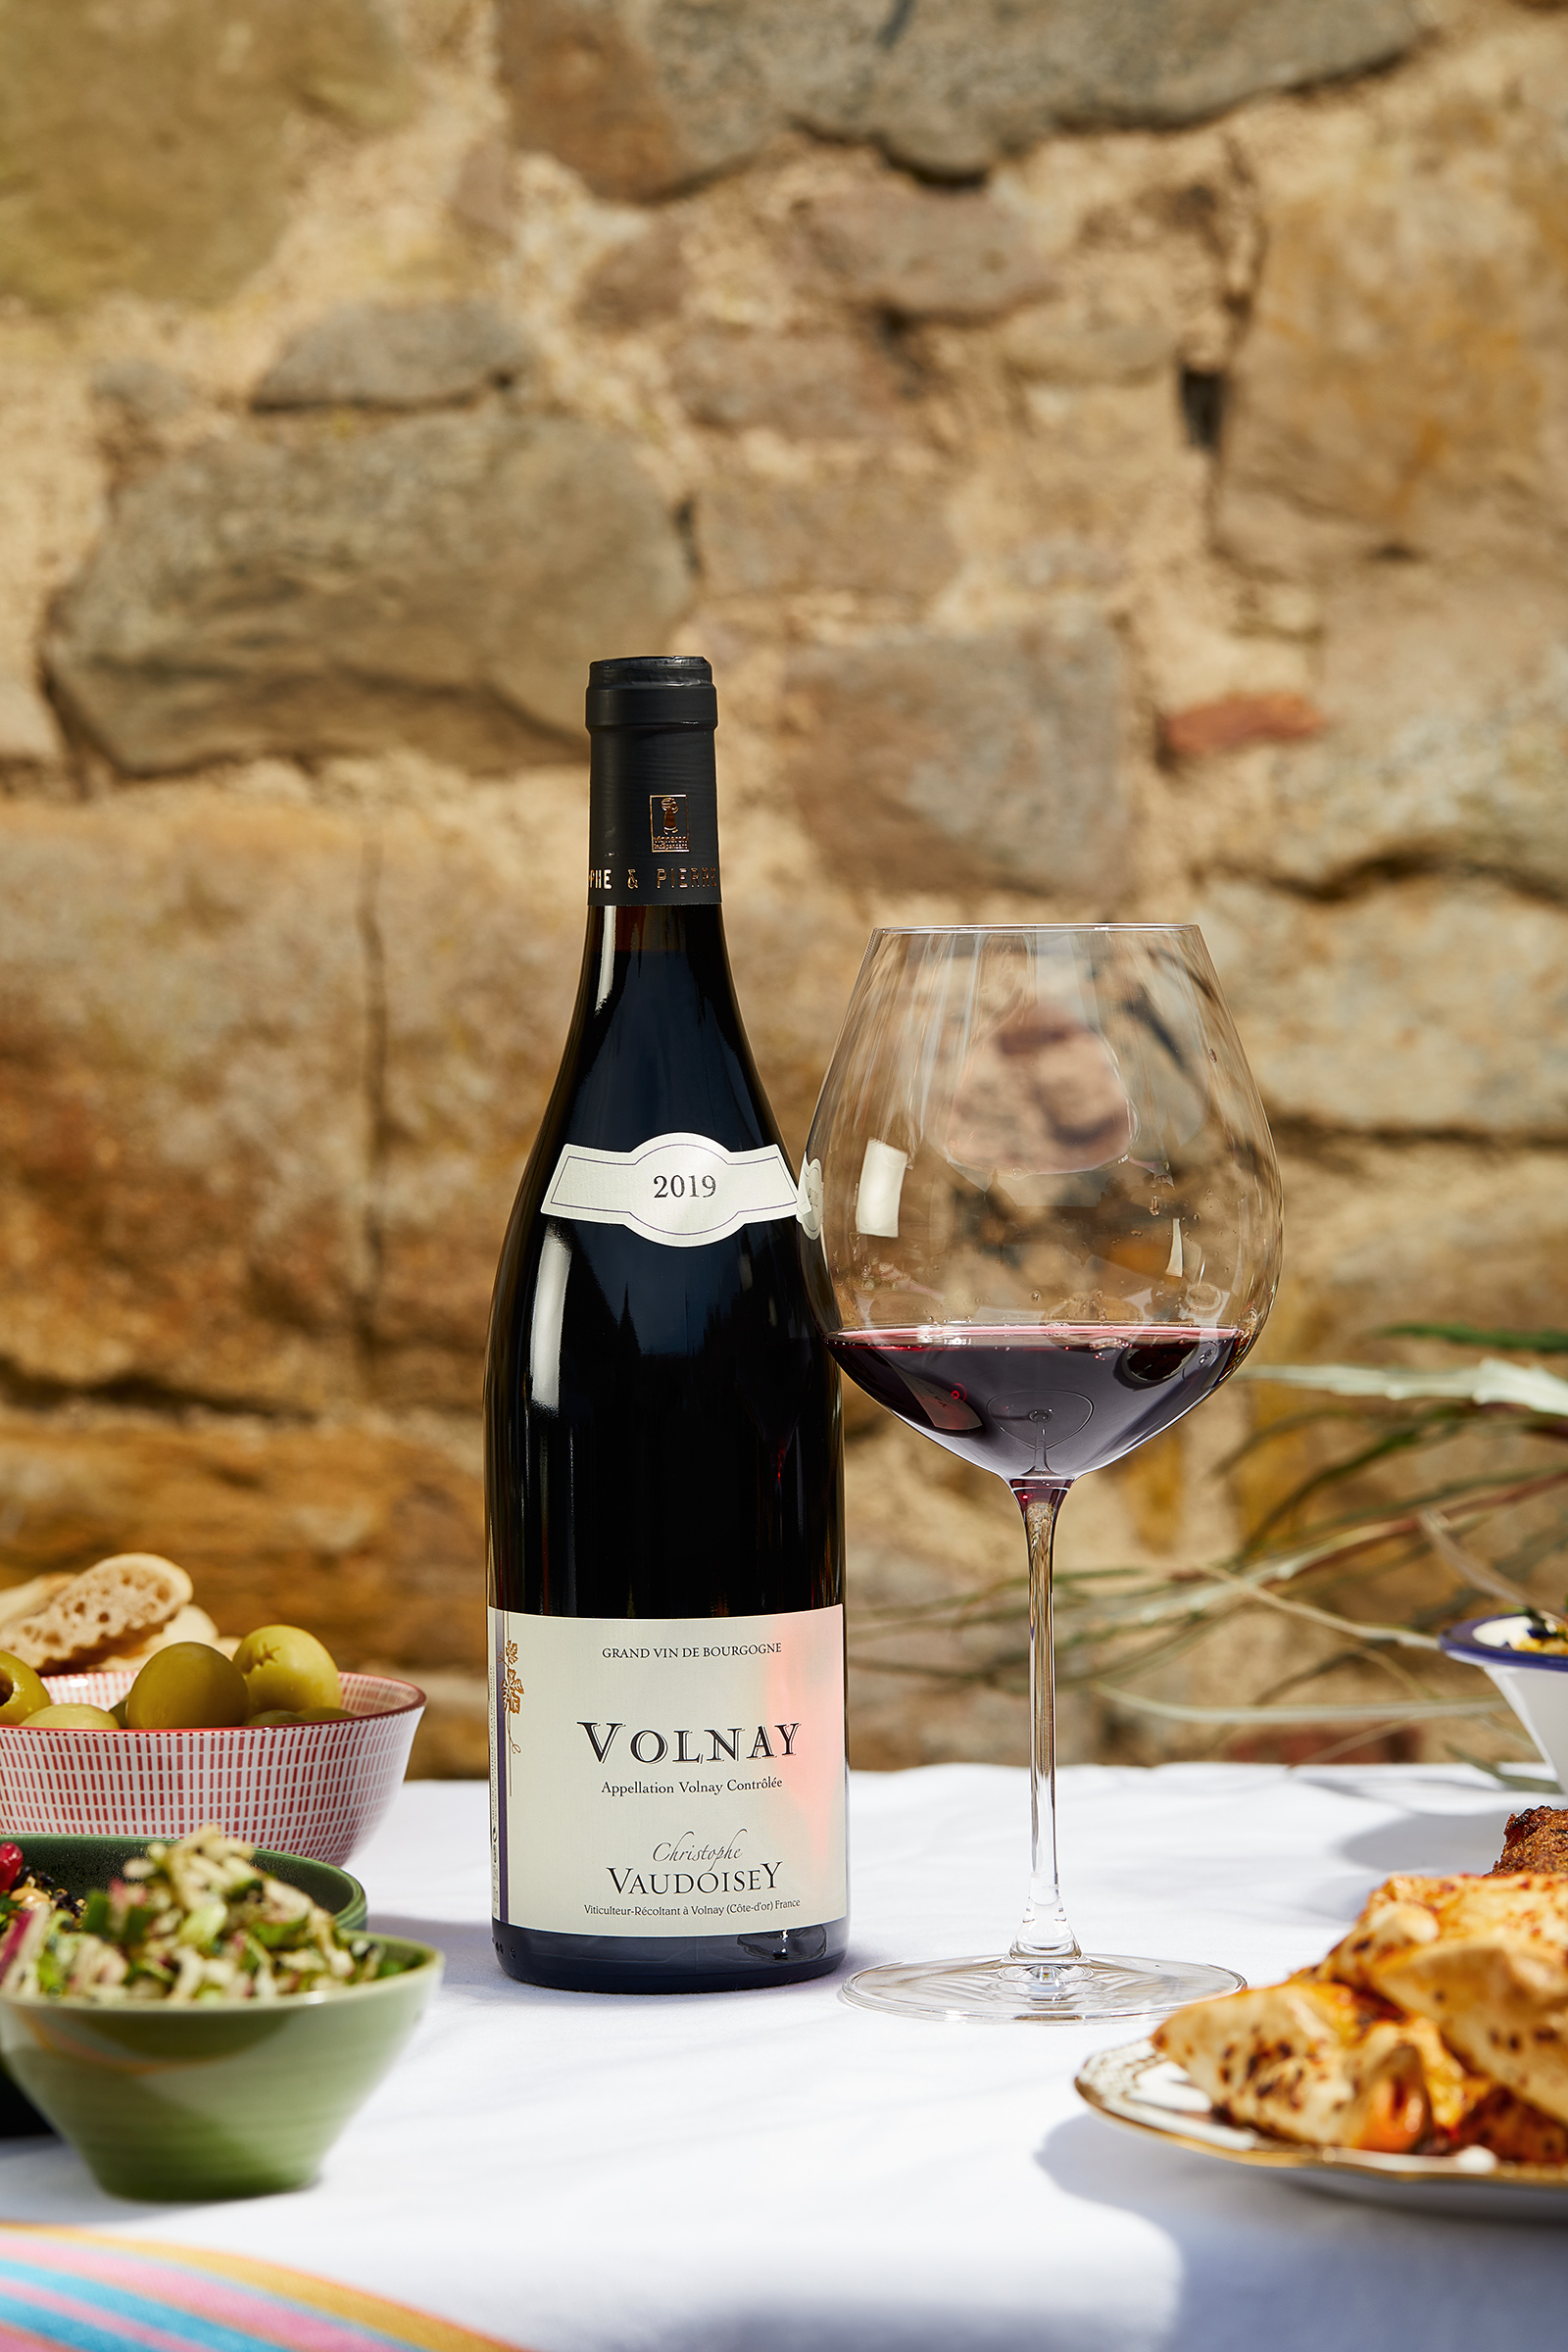 Glass of Vaudoisey Volnay wine, De Burgh Wine Merchants, food and drink photographer